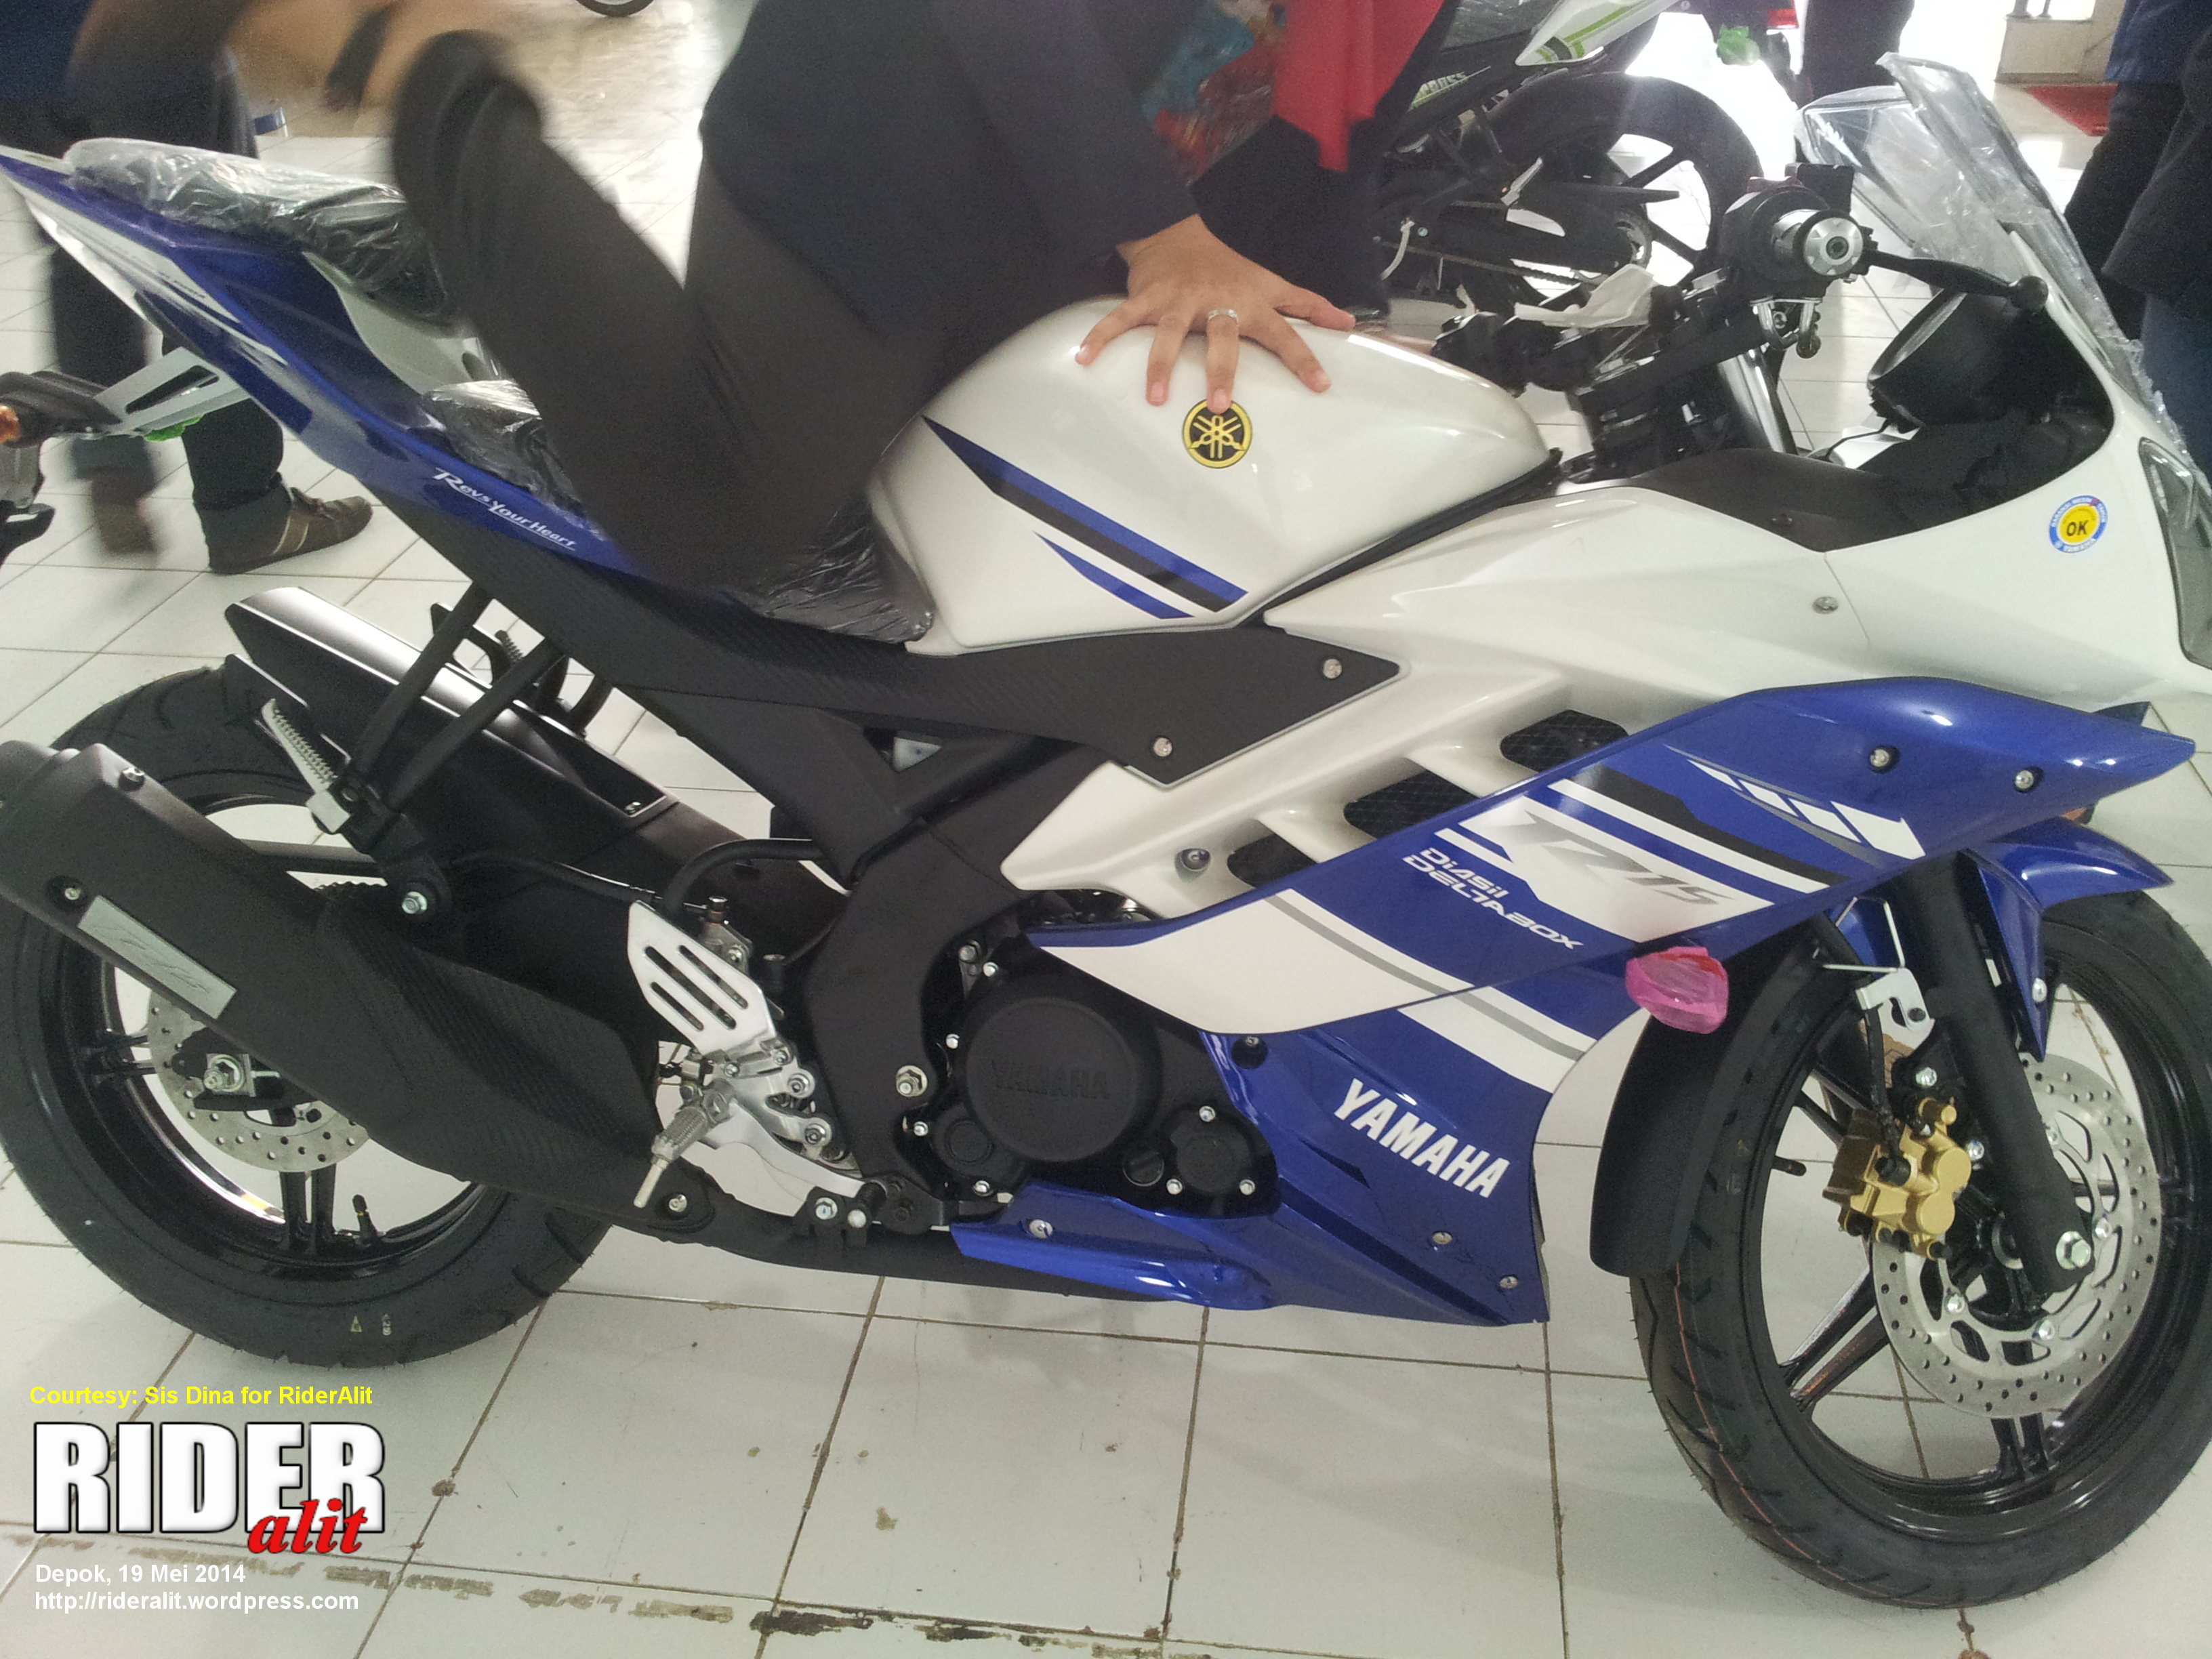 Yamaha R15 RiderAlit